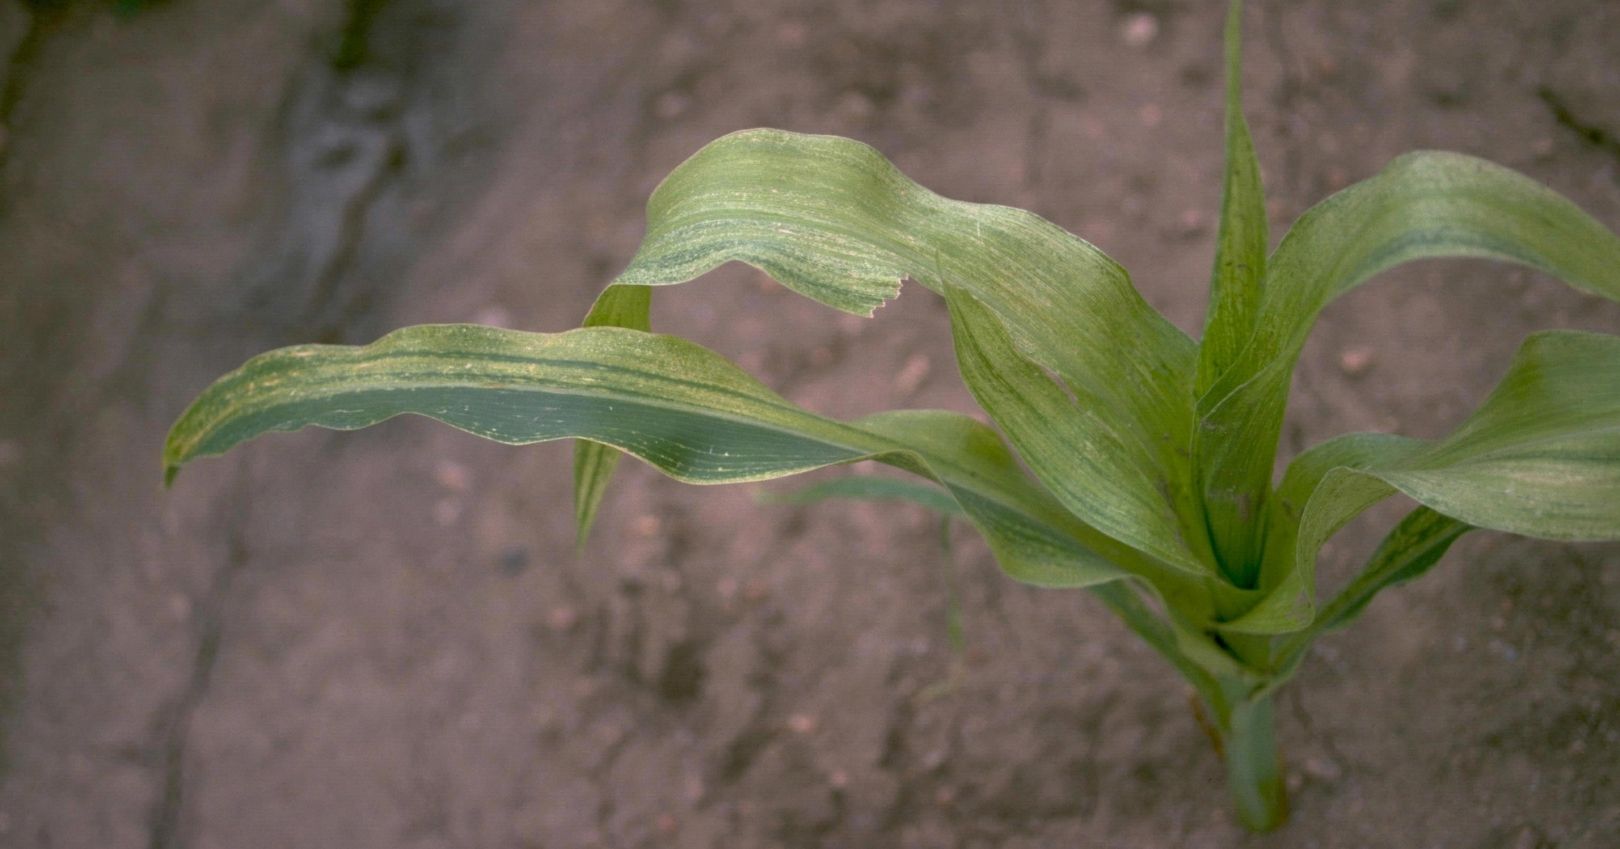 Symptoms of Wheat Mosaic Virus on Sweet Corn